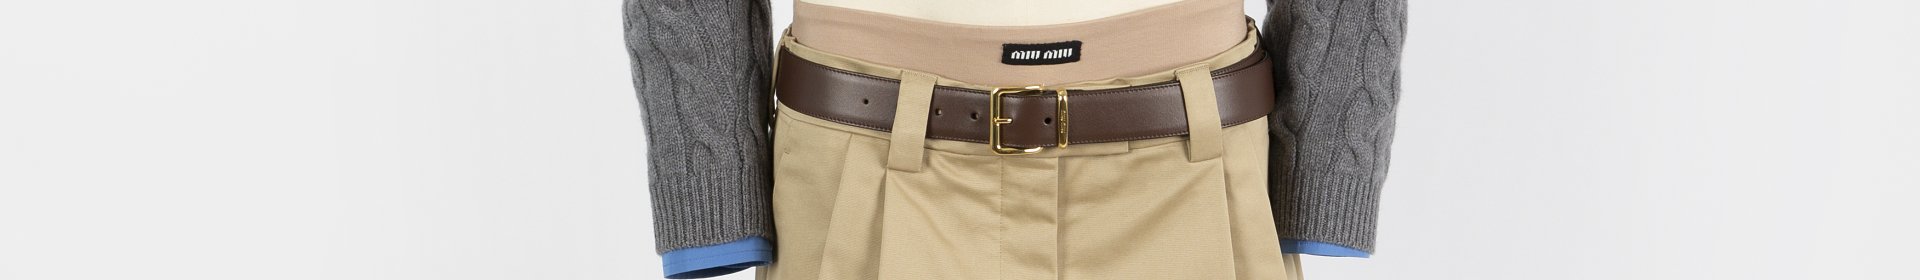 Image: The Miu Miu micro mini skirt worn with a brown belt